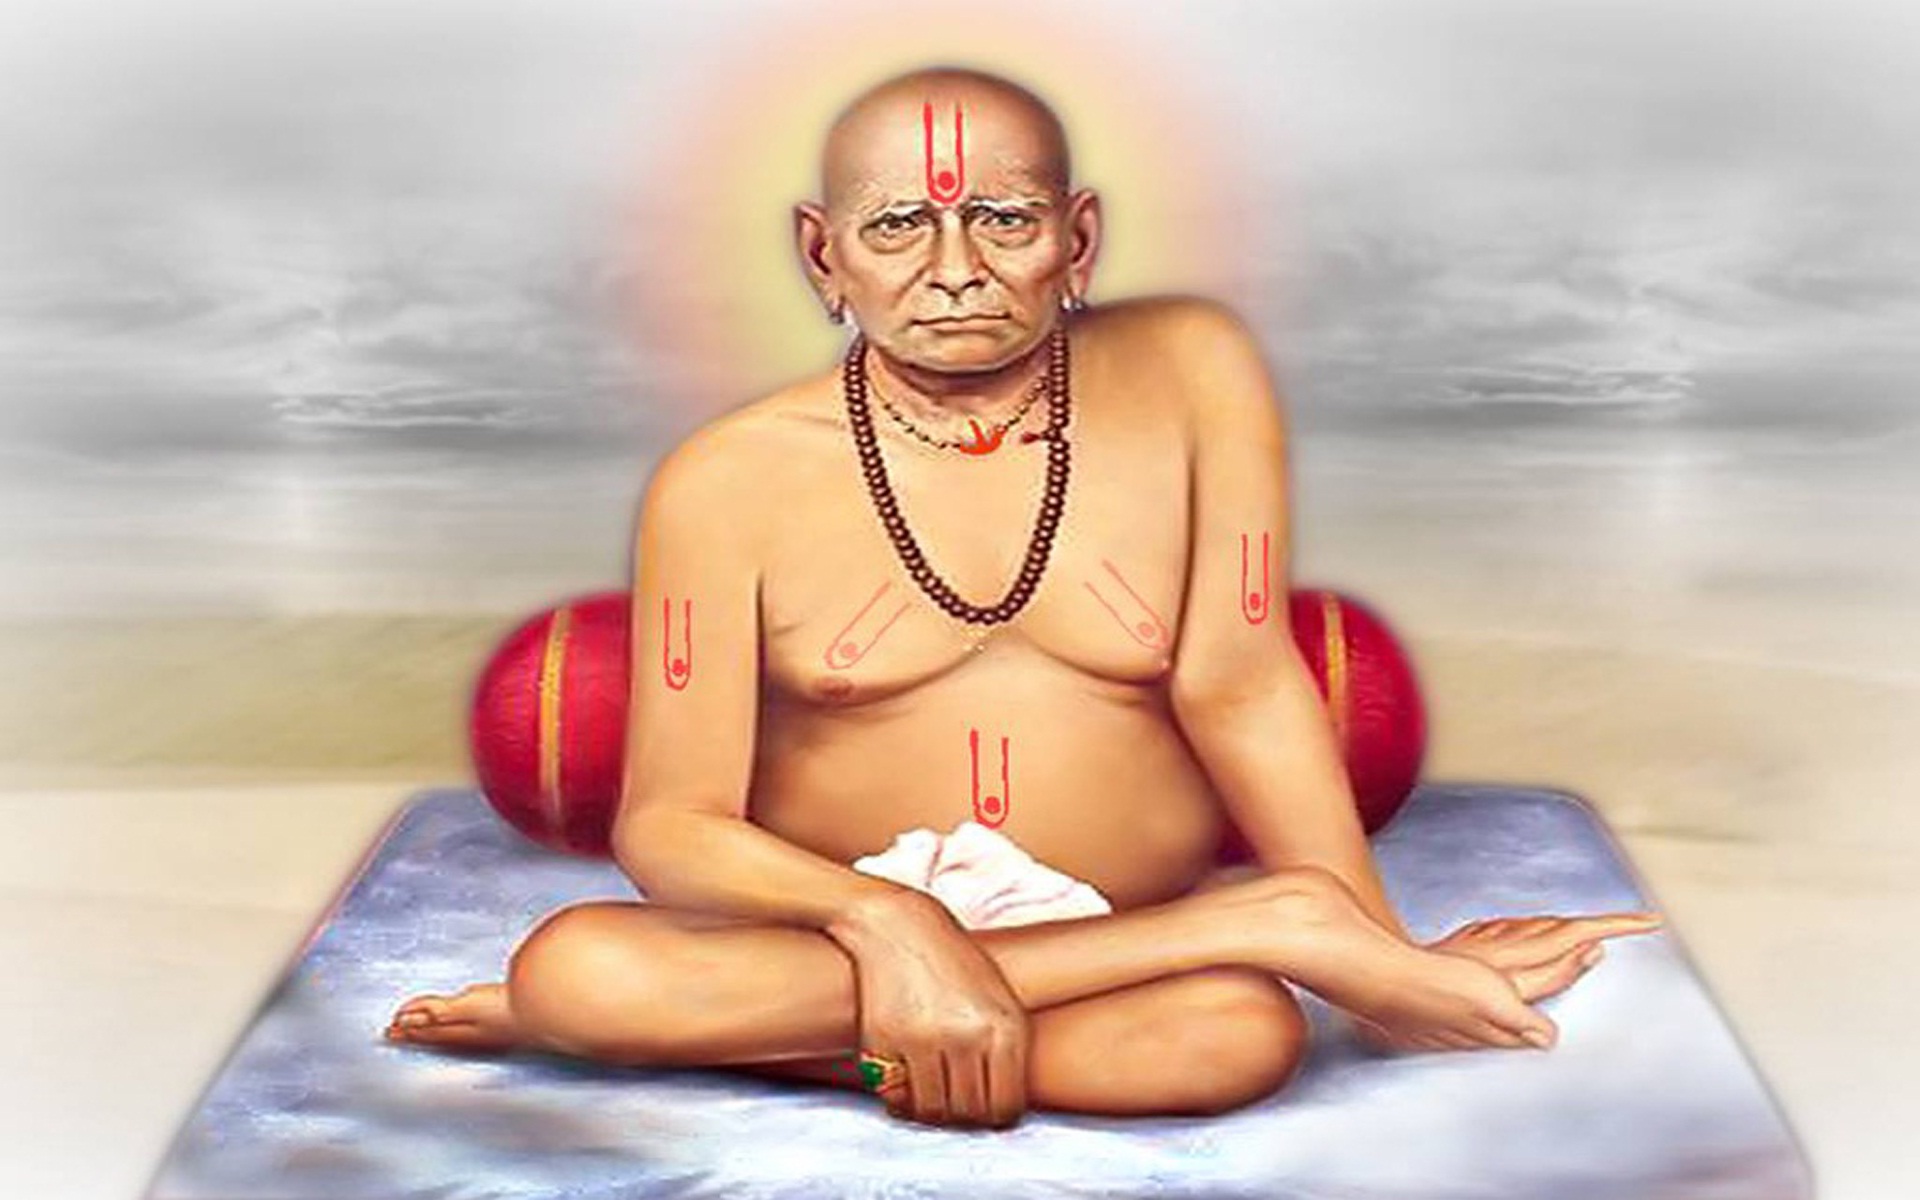 Swami samarth hd photo download – Printable graphics